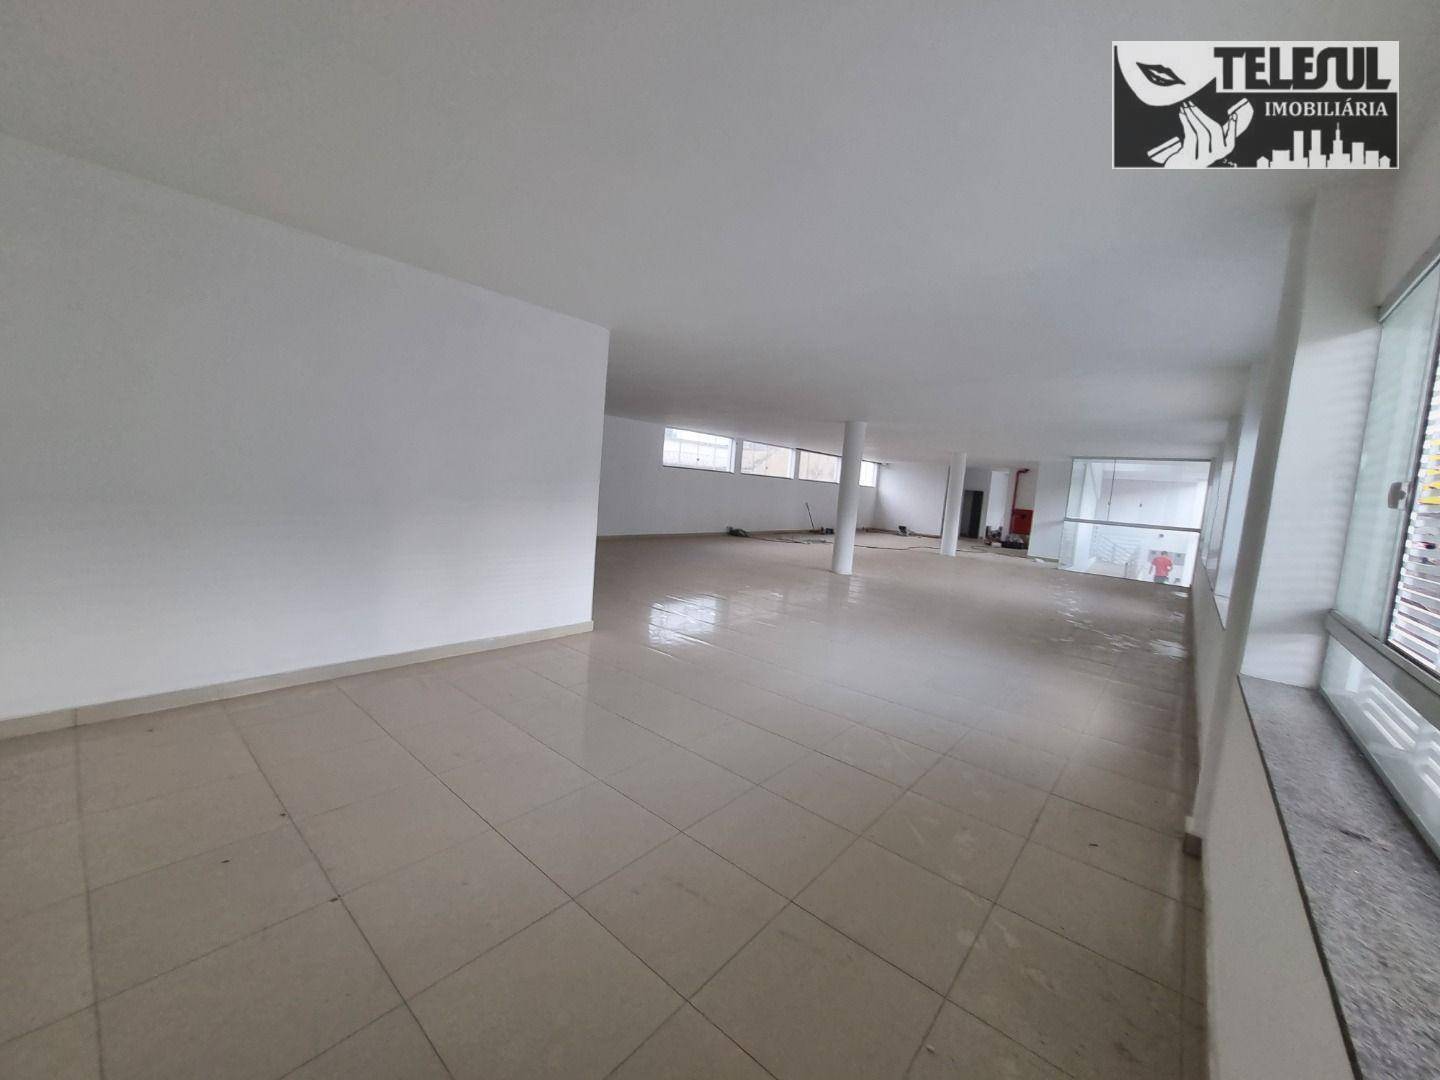 Loja-Salão, 740 m² - Foto 3